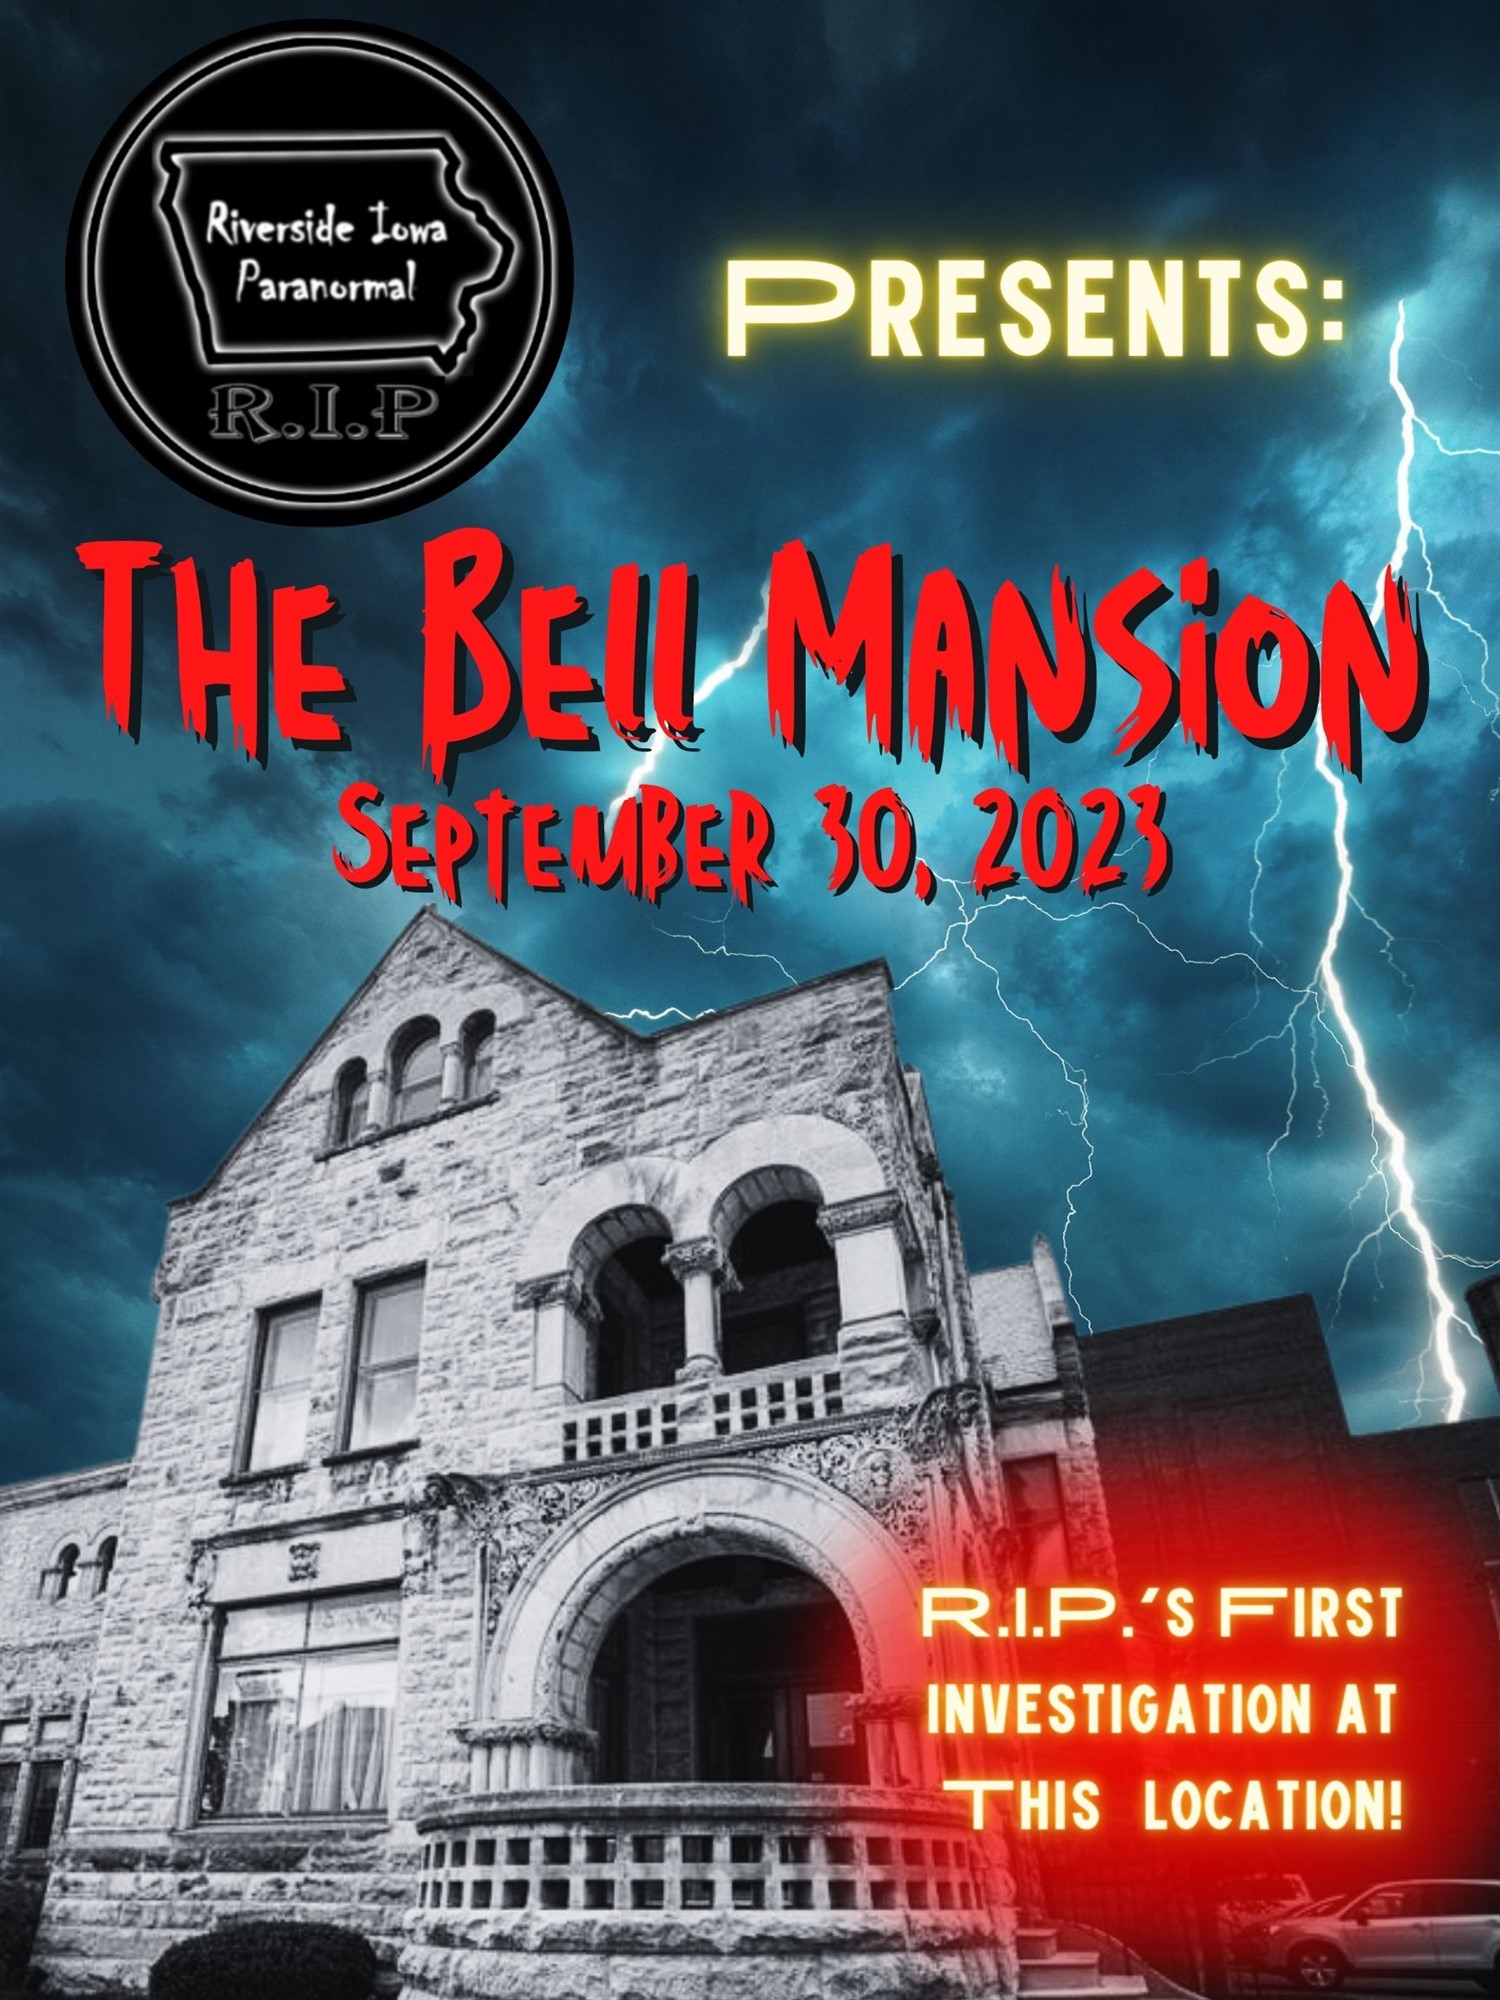 The Bell Mansion  on sep. 30, 20:00@The Bell Mansion - Compra entradas y obtén información enThriller Events thriller.events